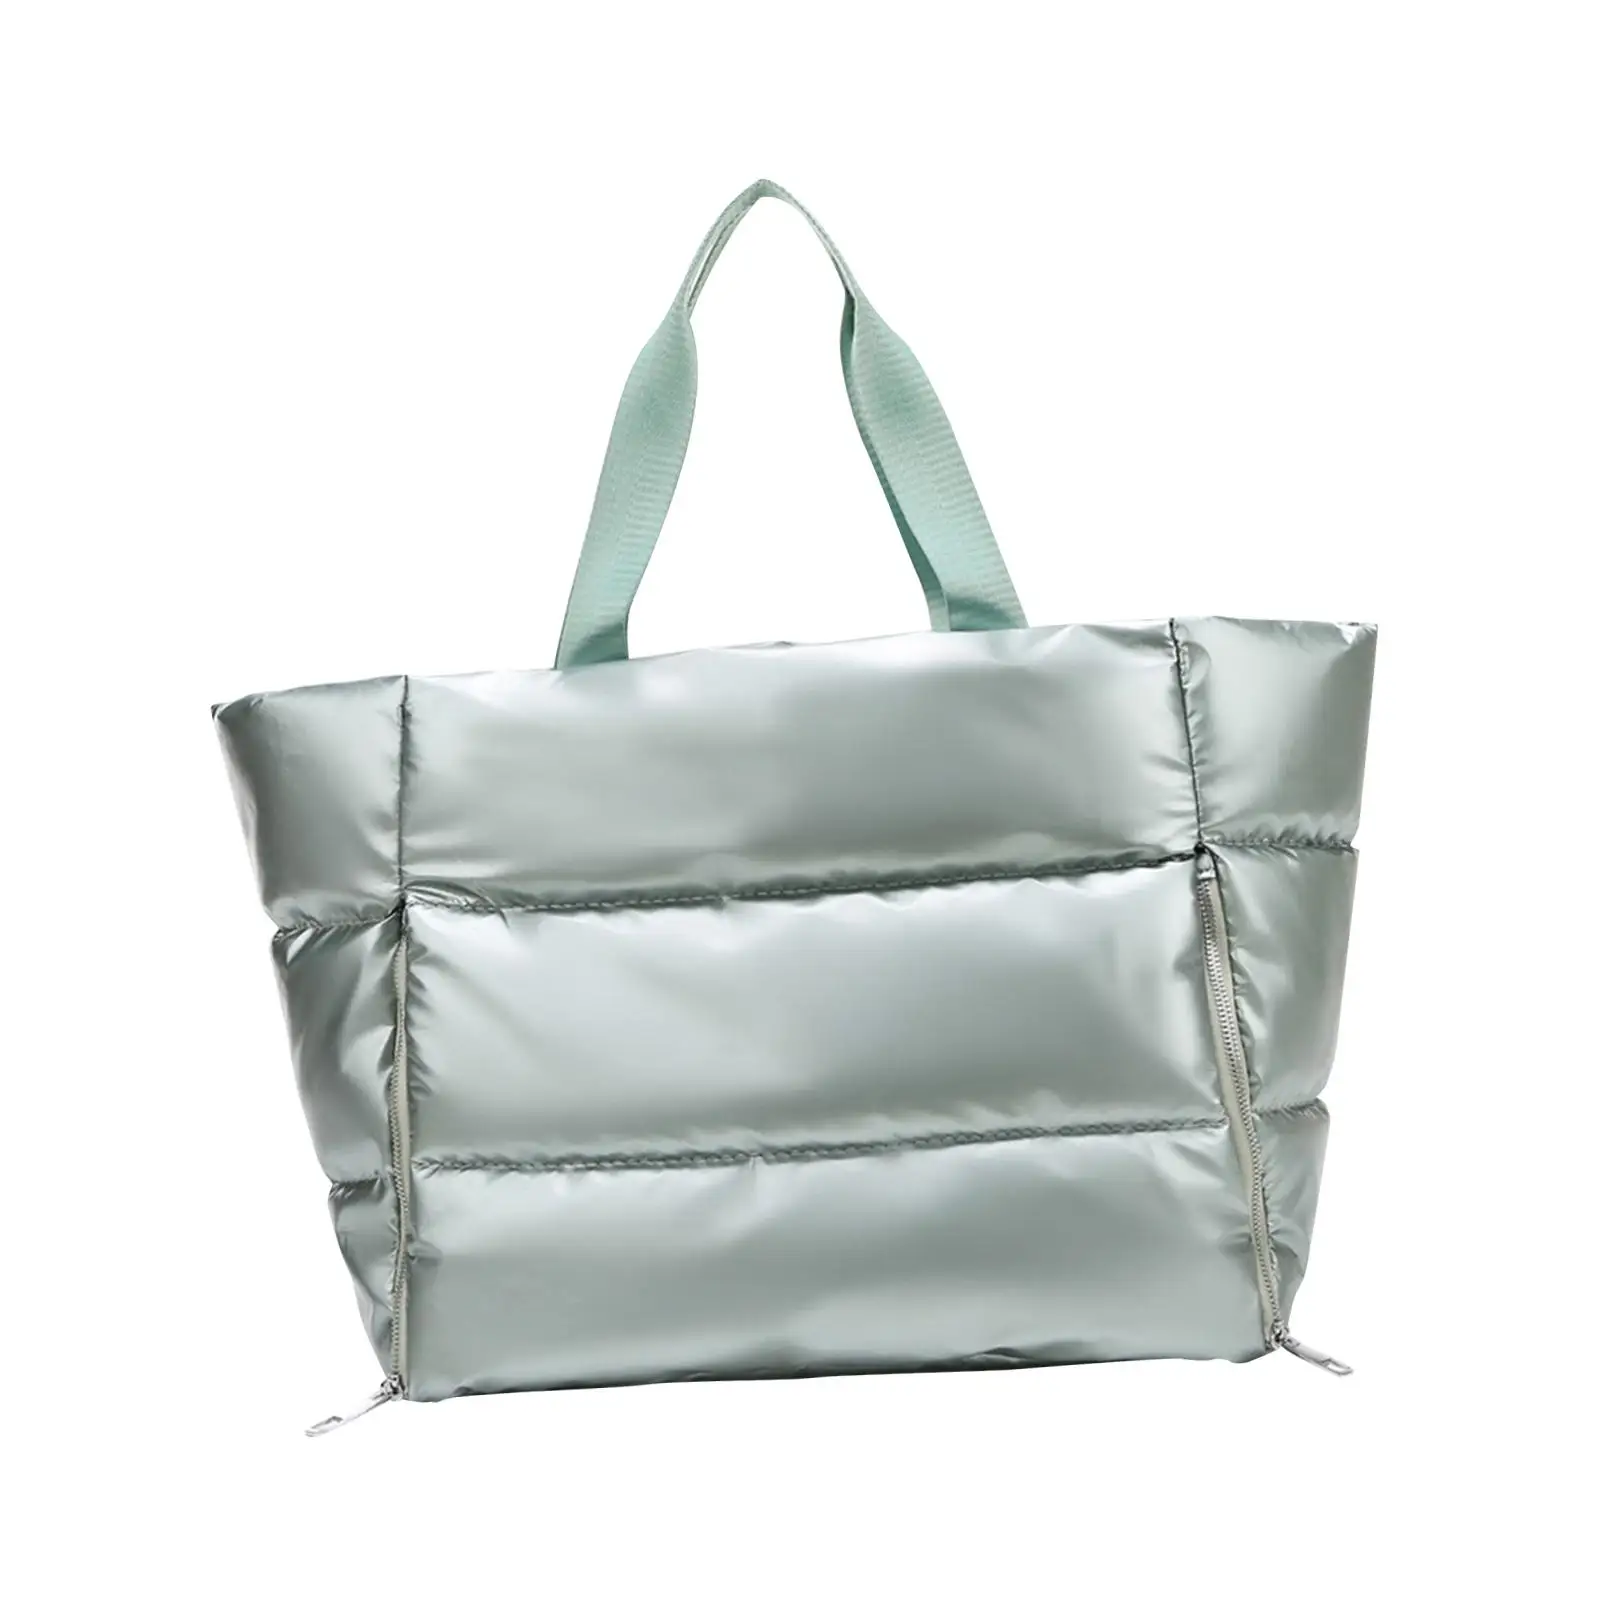 Duffle Bag Tote Adjustable Detachable Strap Shoulder Bag Travel Luggage Bag Sports Gym Bag for Golf Fitness Swimming Trip Yoga